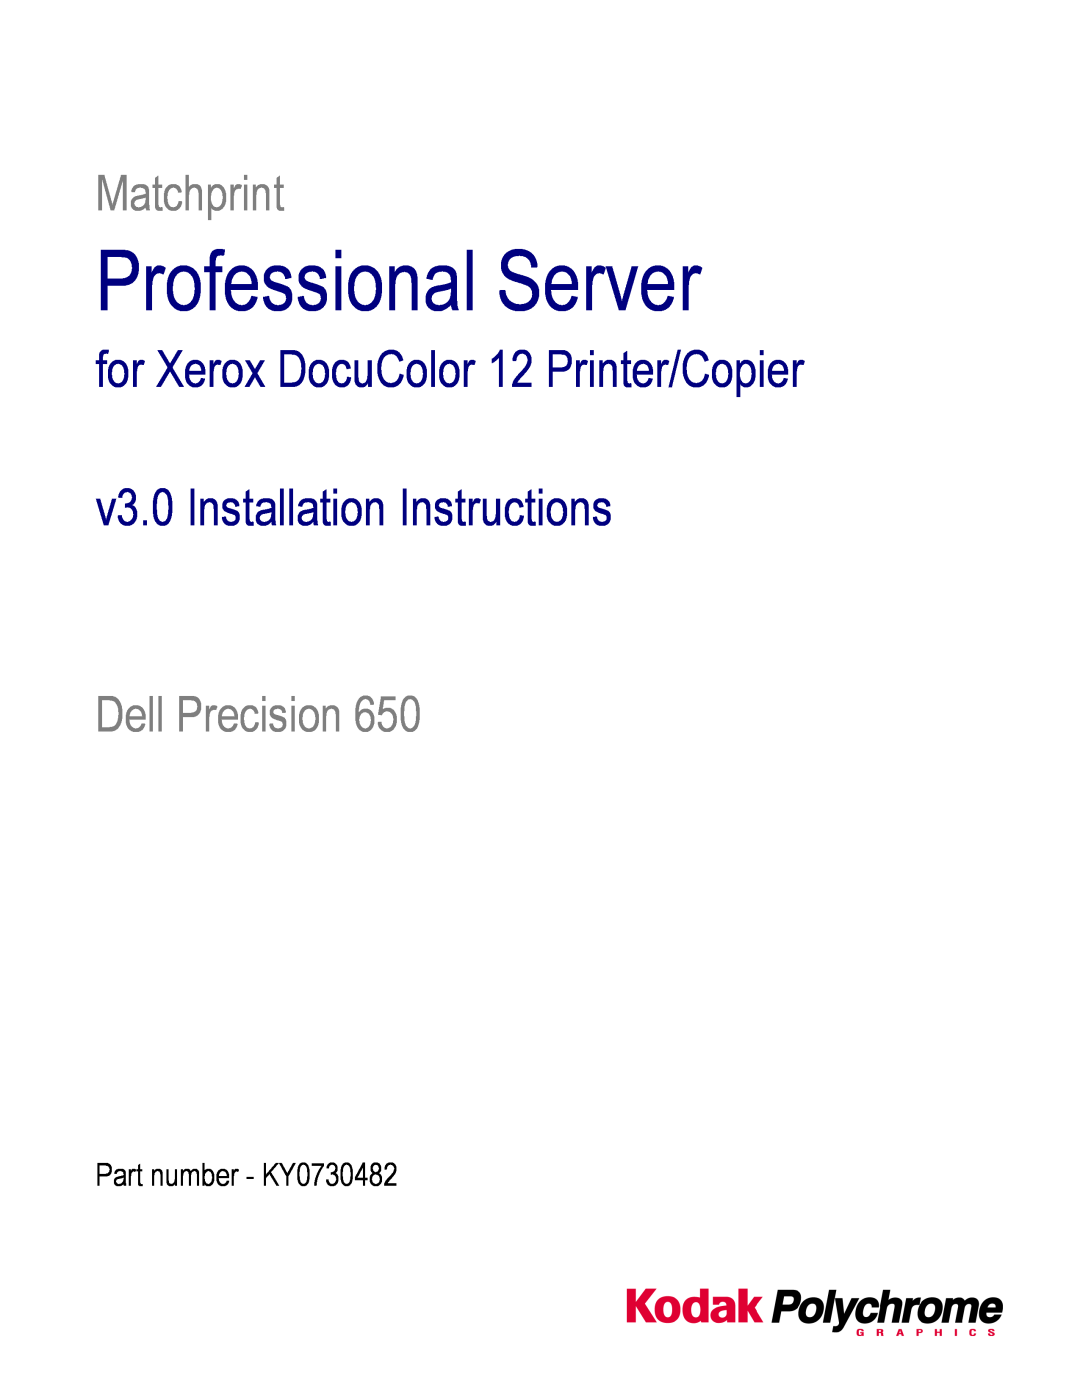 Kodak KY0730482 installation instructions Professional Server, for Xerox DocuColor 12 Printer/Copier, Matchprint 